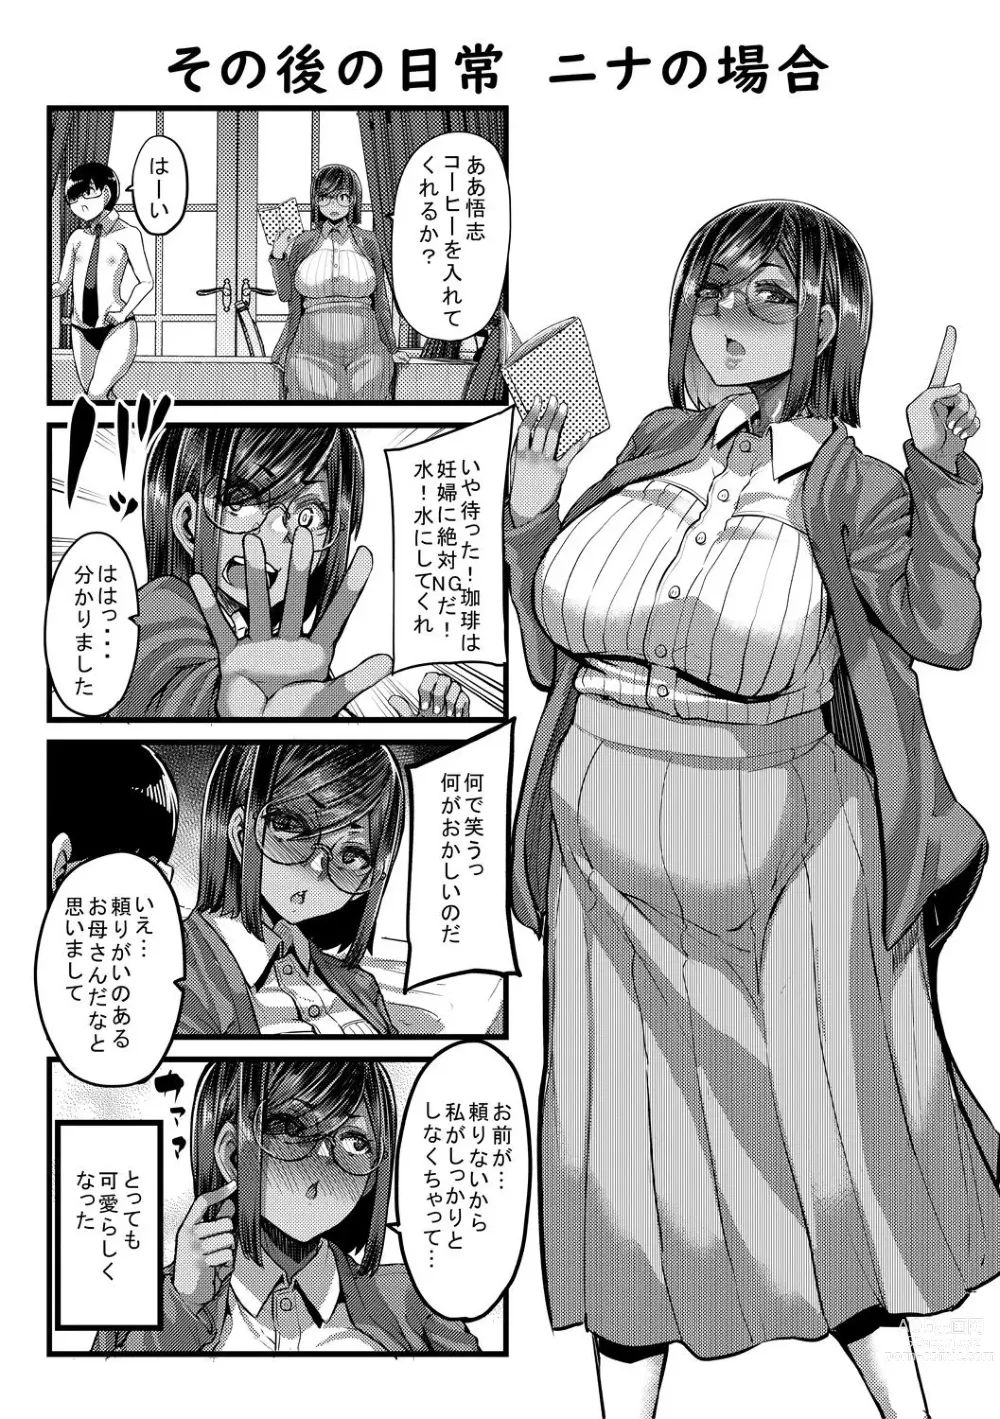 Page 206 of manga Kasshoku Hime to Himitsu no Keiyaku